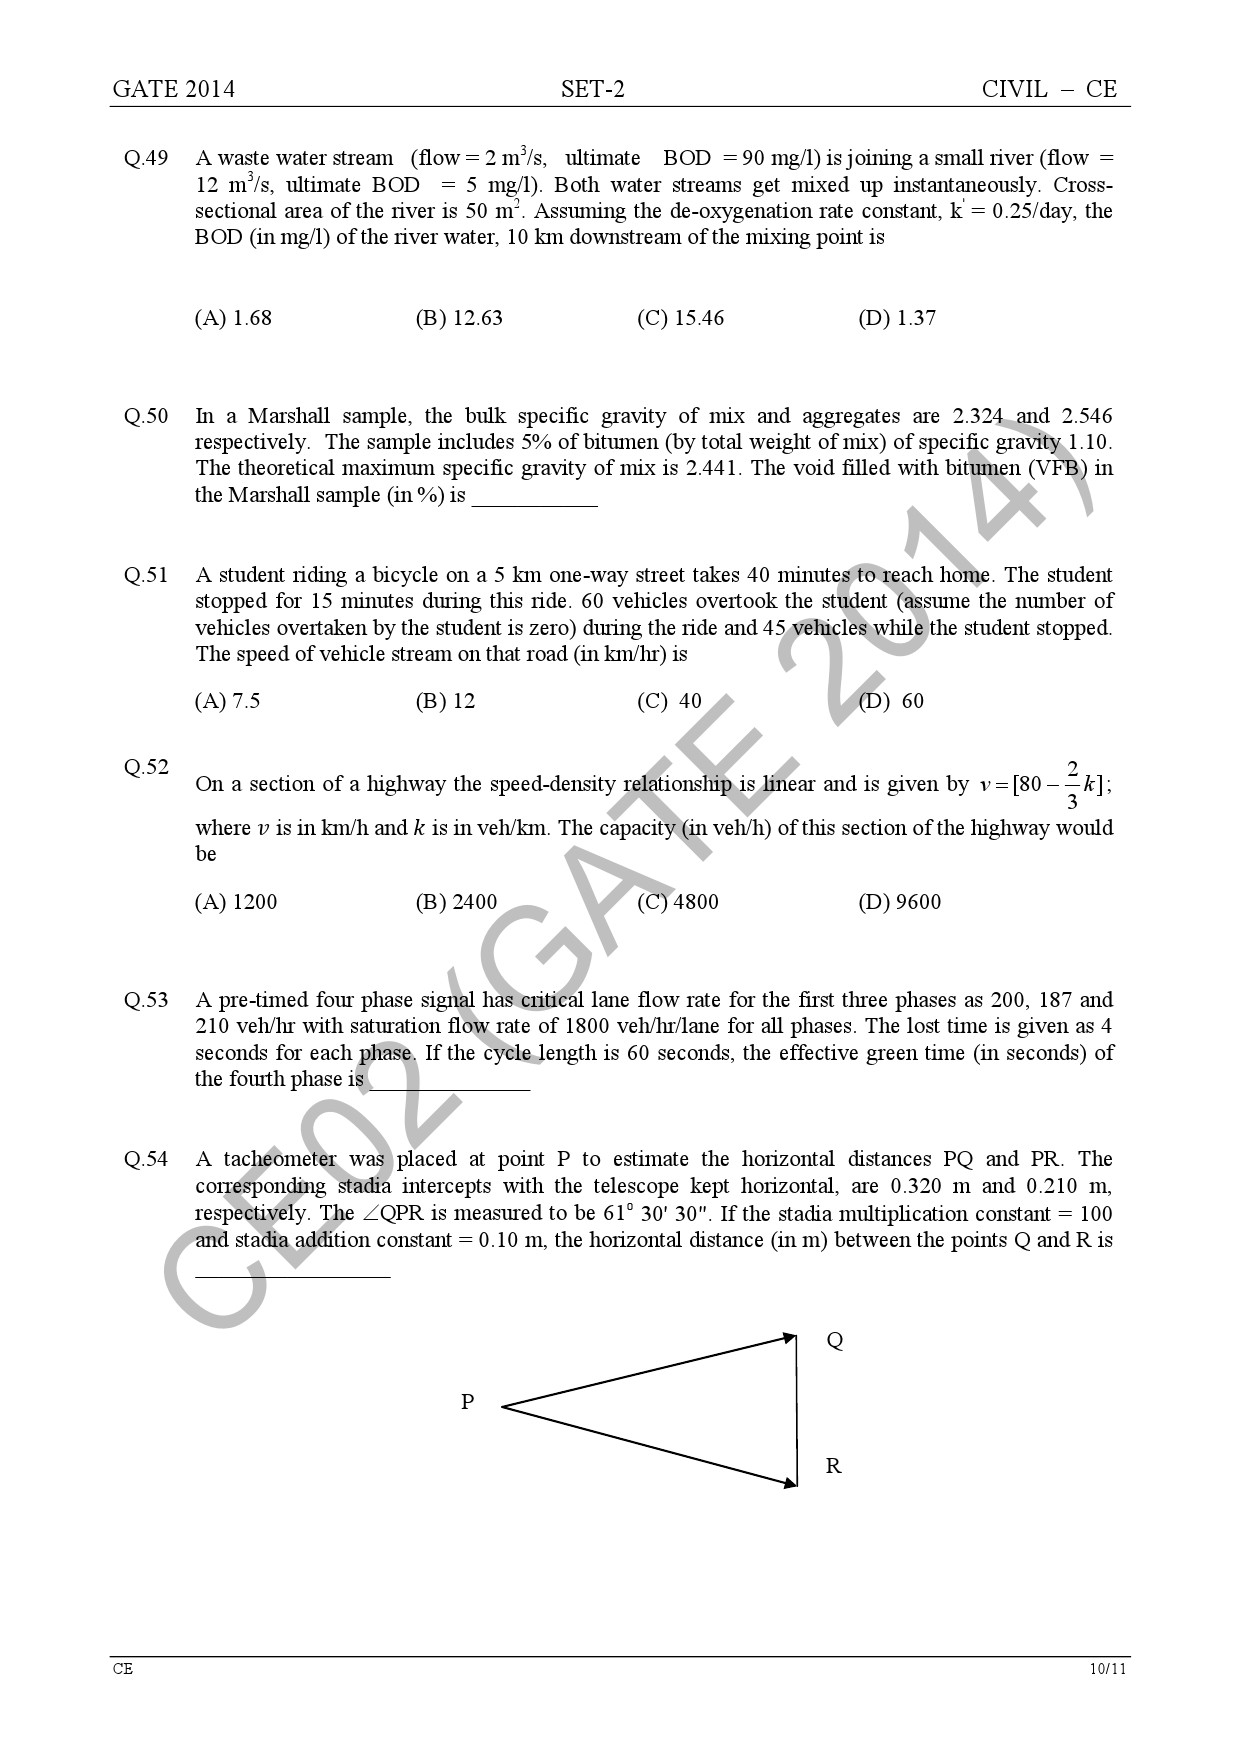 GATE Exam Question Paper 2014 Civil Engineering Set 2 16